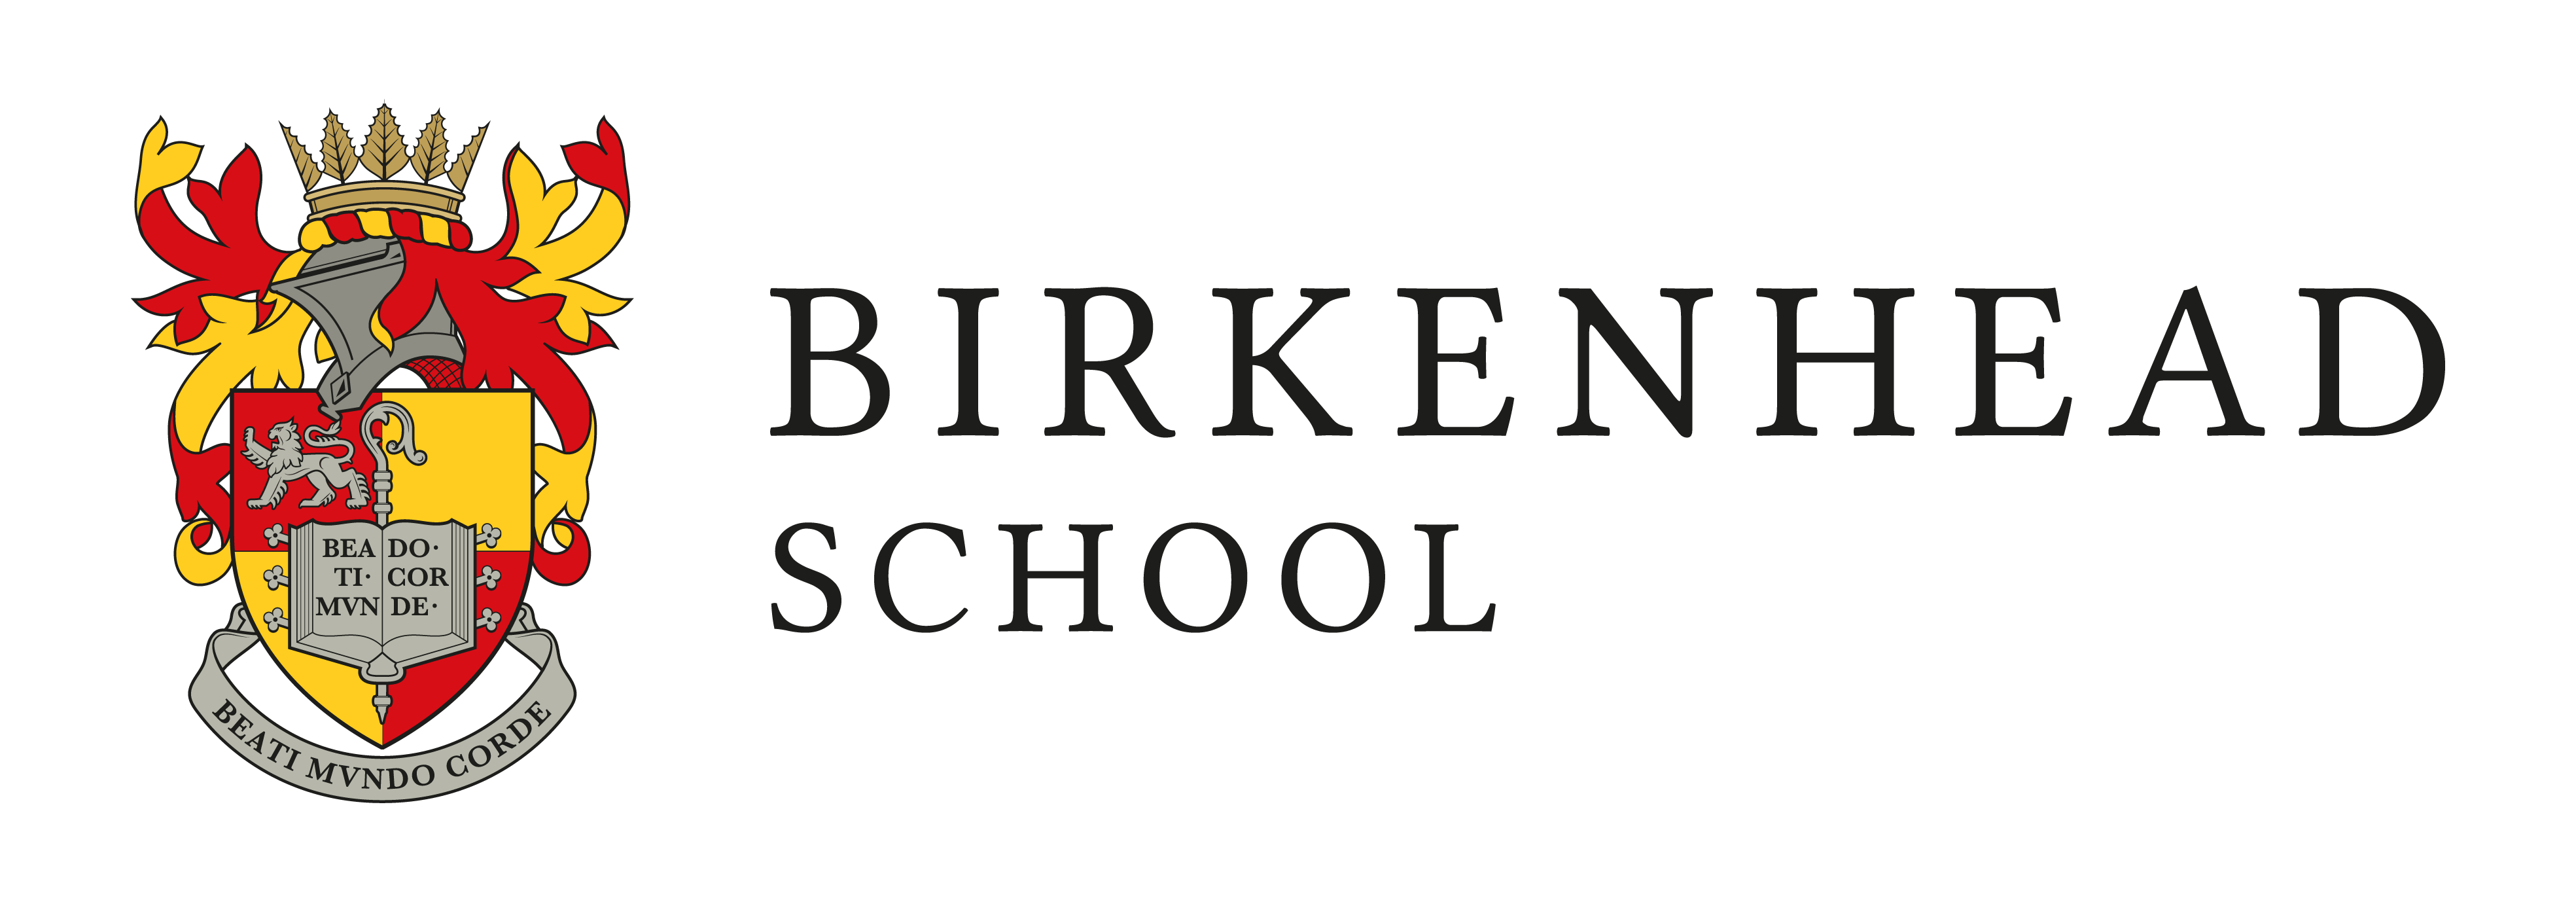 Birkenhead school logo